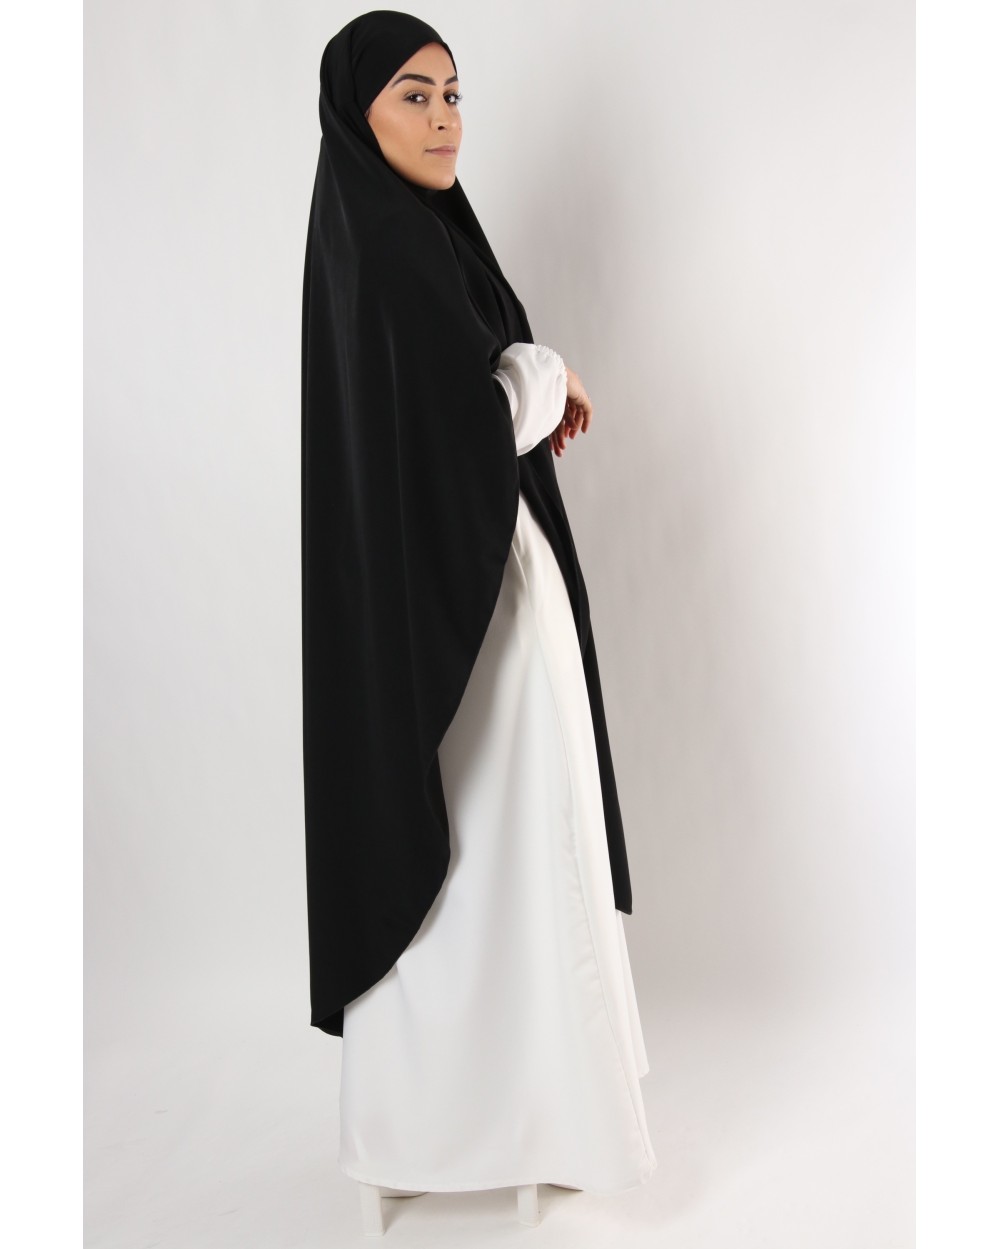 Khimar Kamelia jilbab long cape